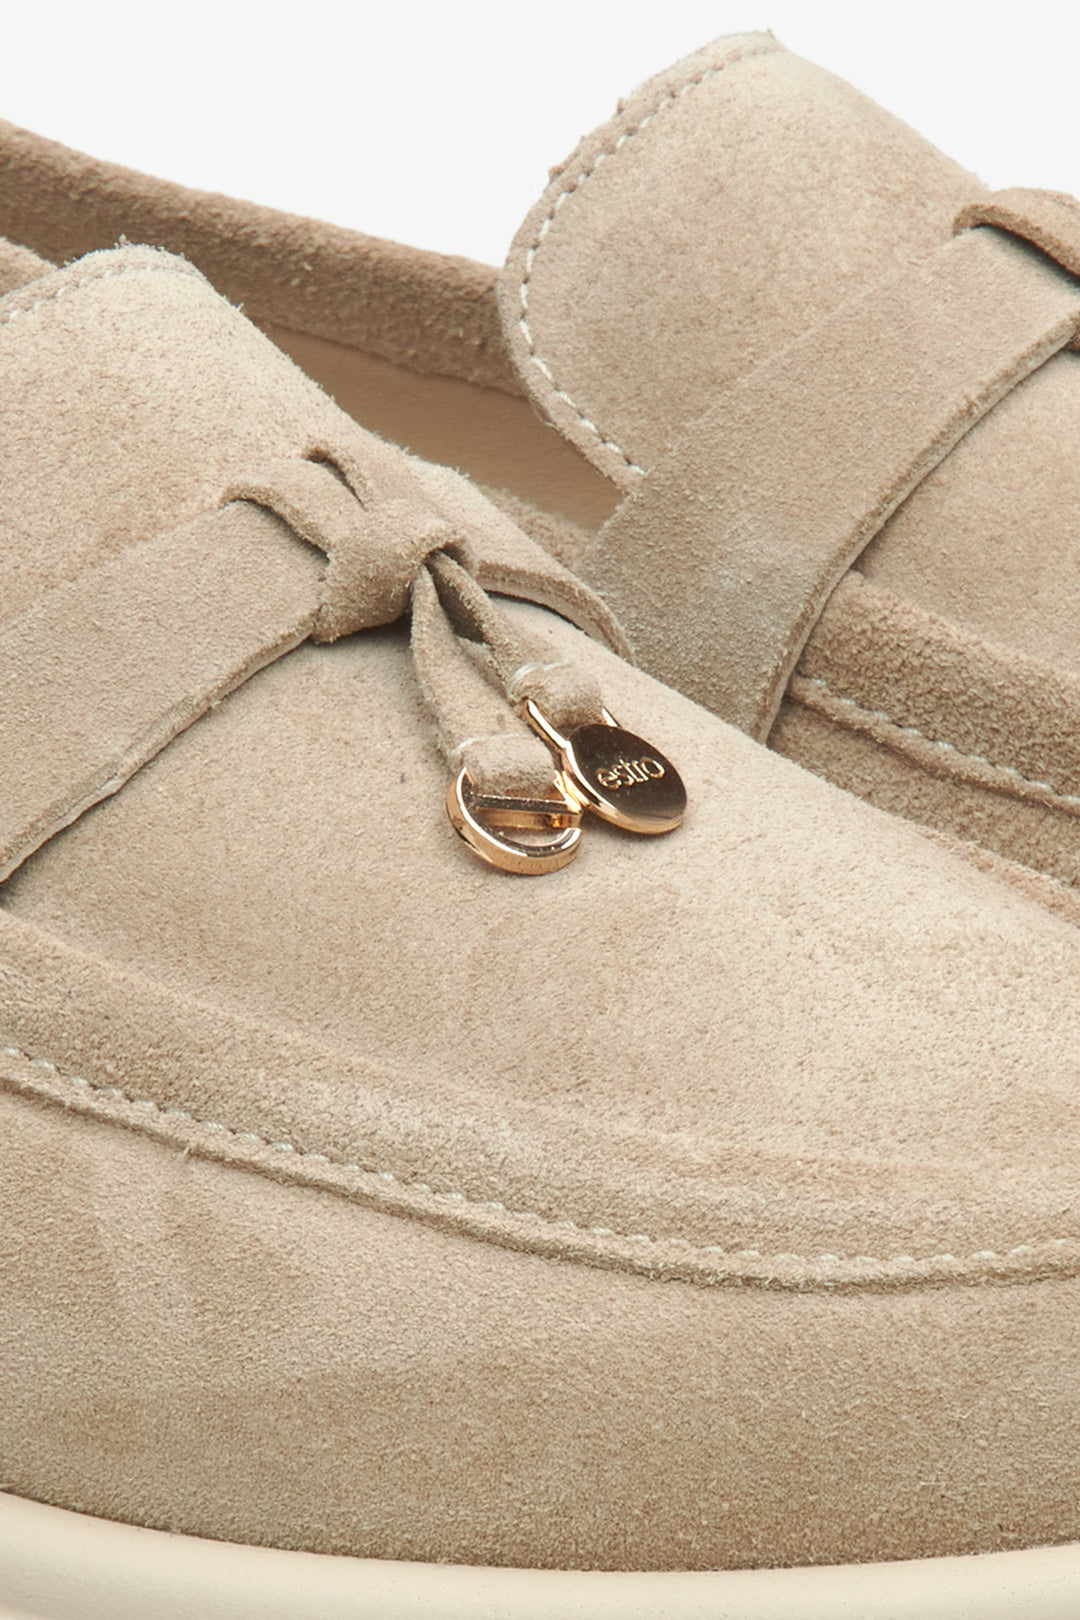 Estro light brown velour women's moccasins - close-up on detail.